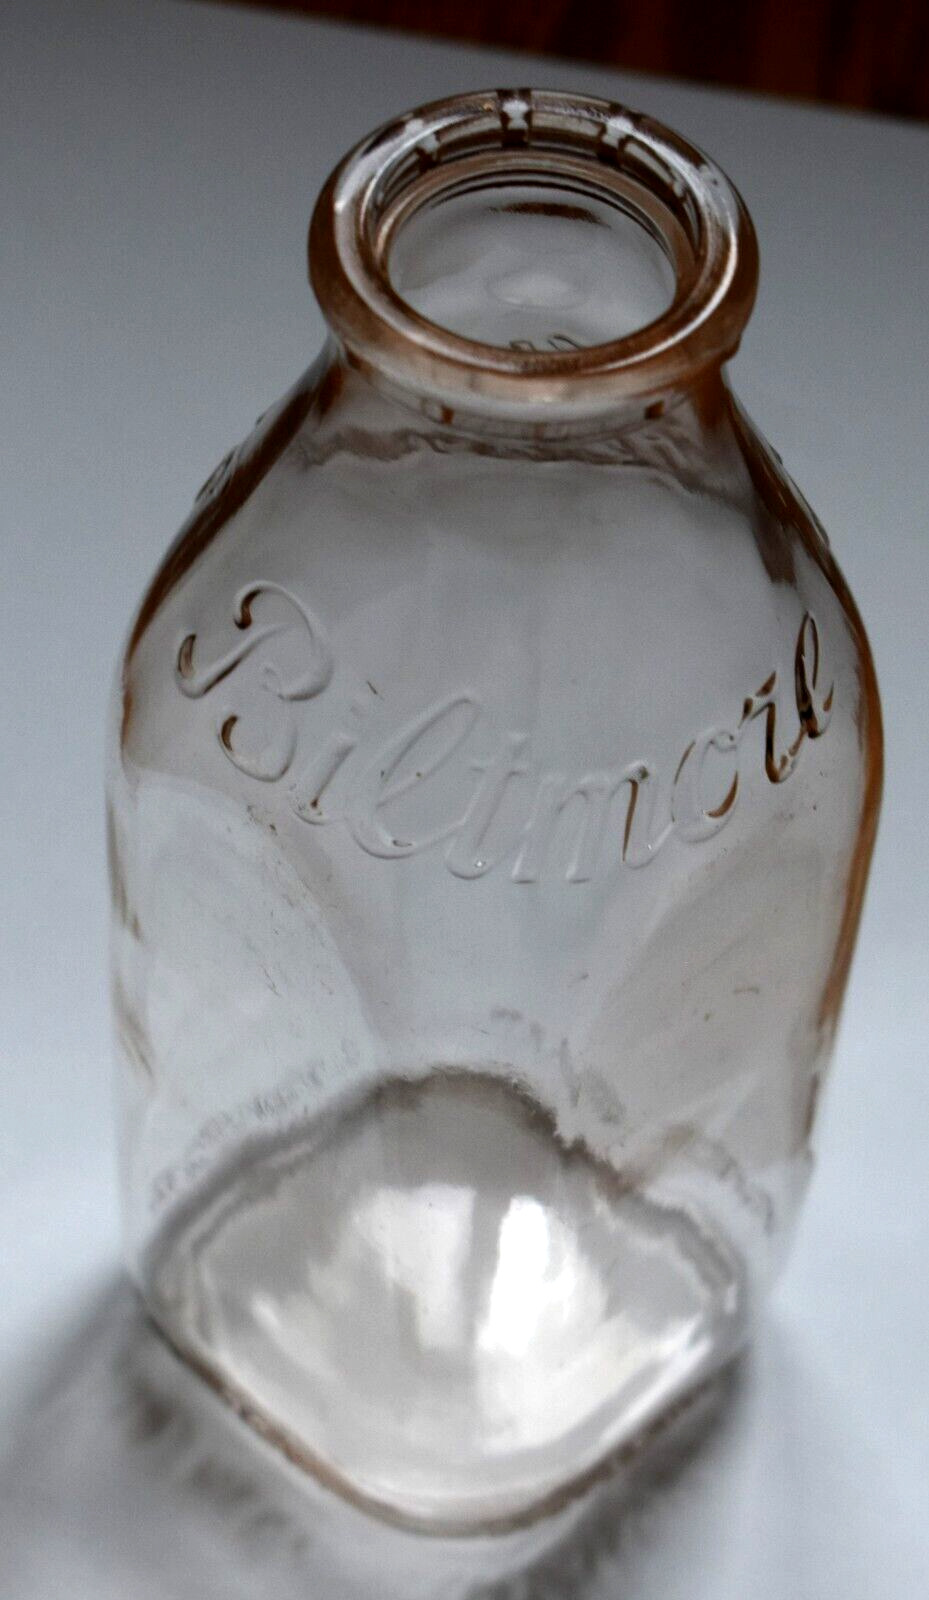 BILTMORE DAIRY FARMS One Quart Milk Bottle Embossed Pink Tint Vintage